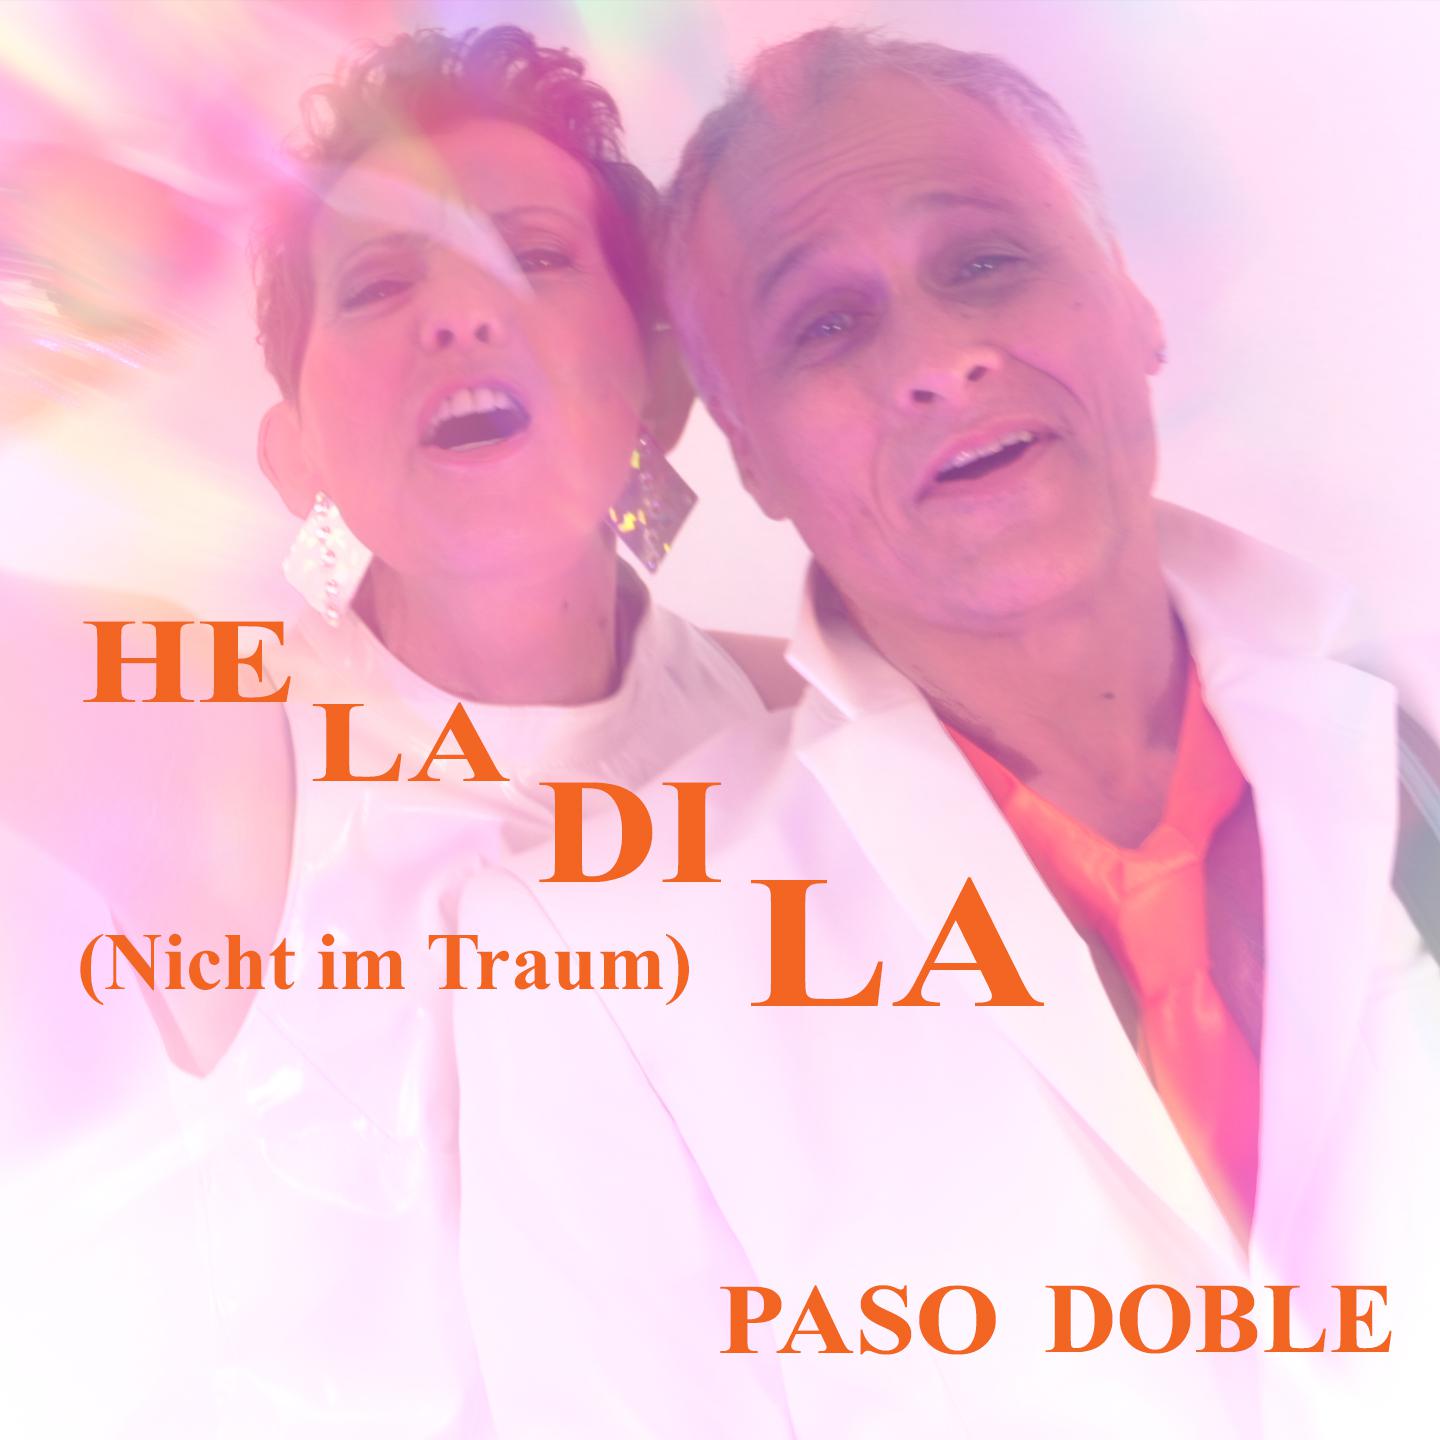 Paso Doble - Heladila (Nicht im Traum) 30 sec (Heladila (Nicht im Traum) Tik Tok - Version 30 sec)